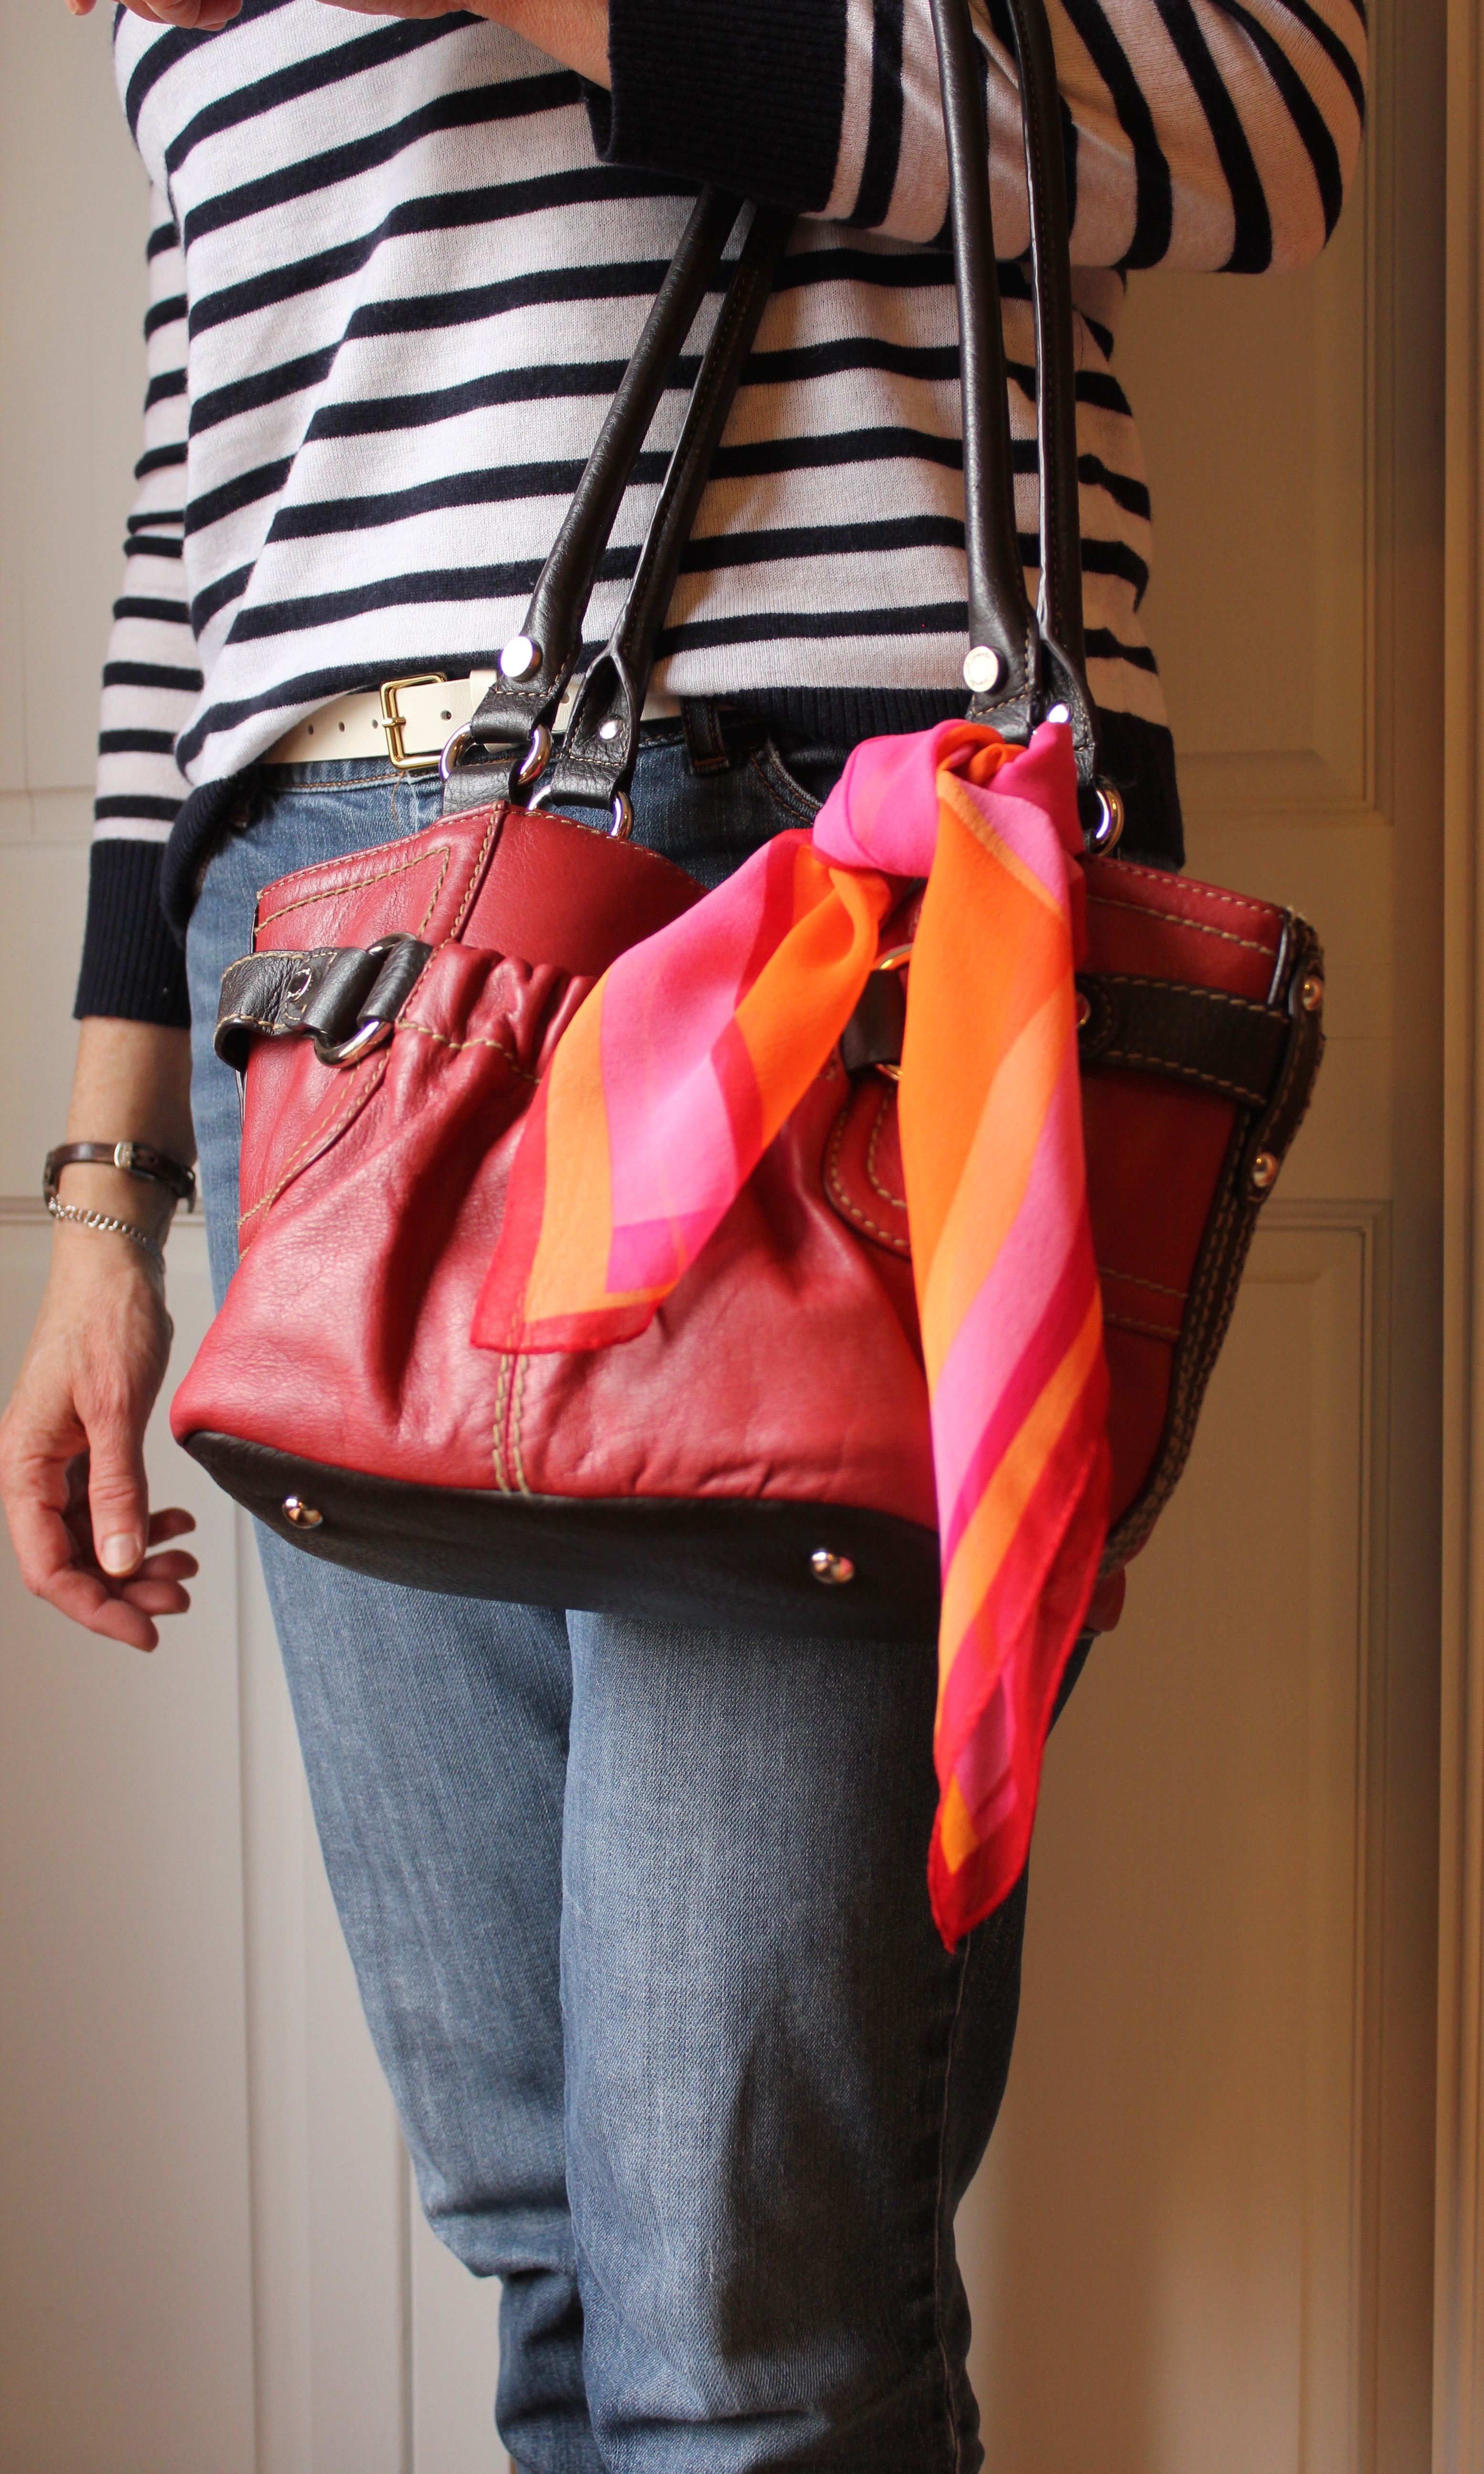 How to tie a silk scarf in a bag #Lv #bag #silkscarf #fashion #love #t